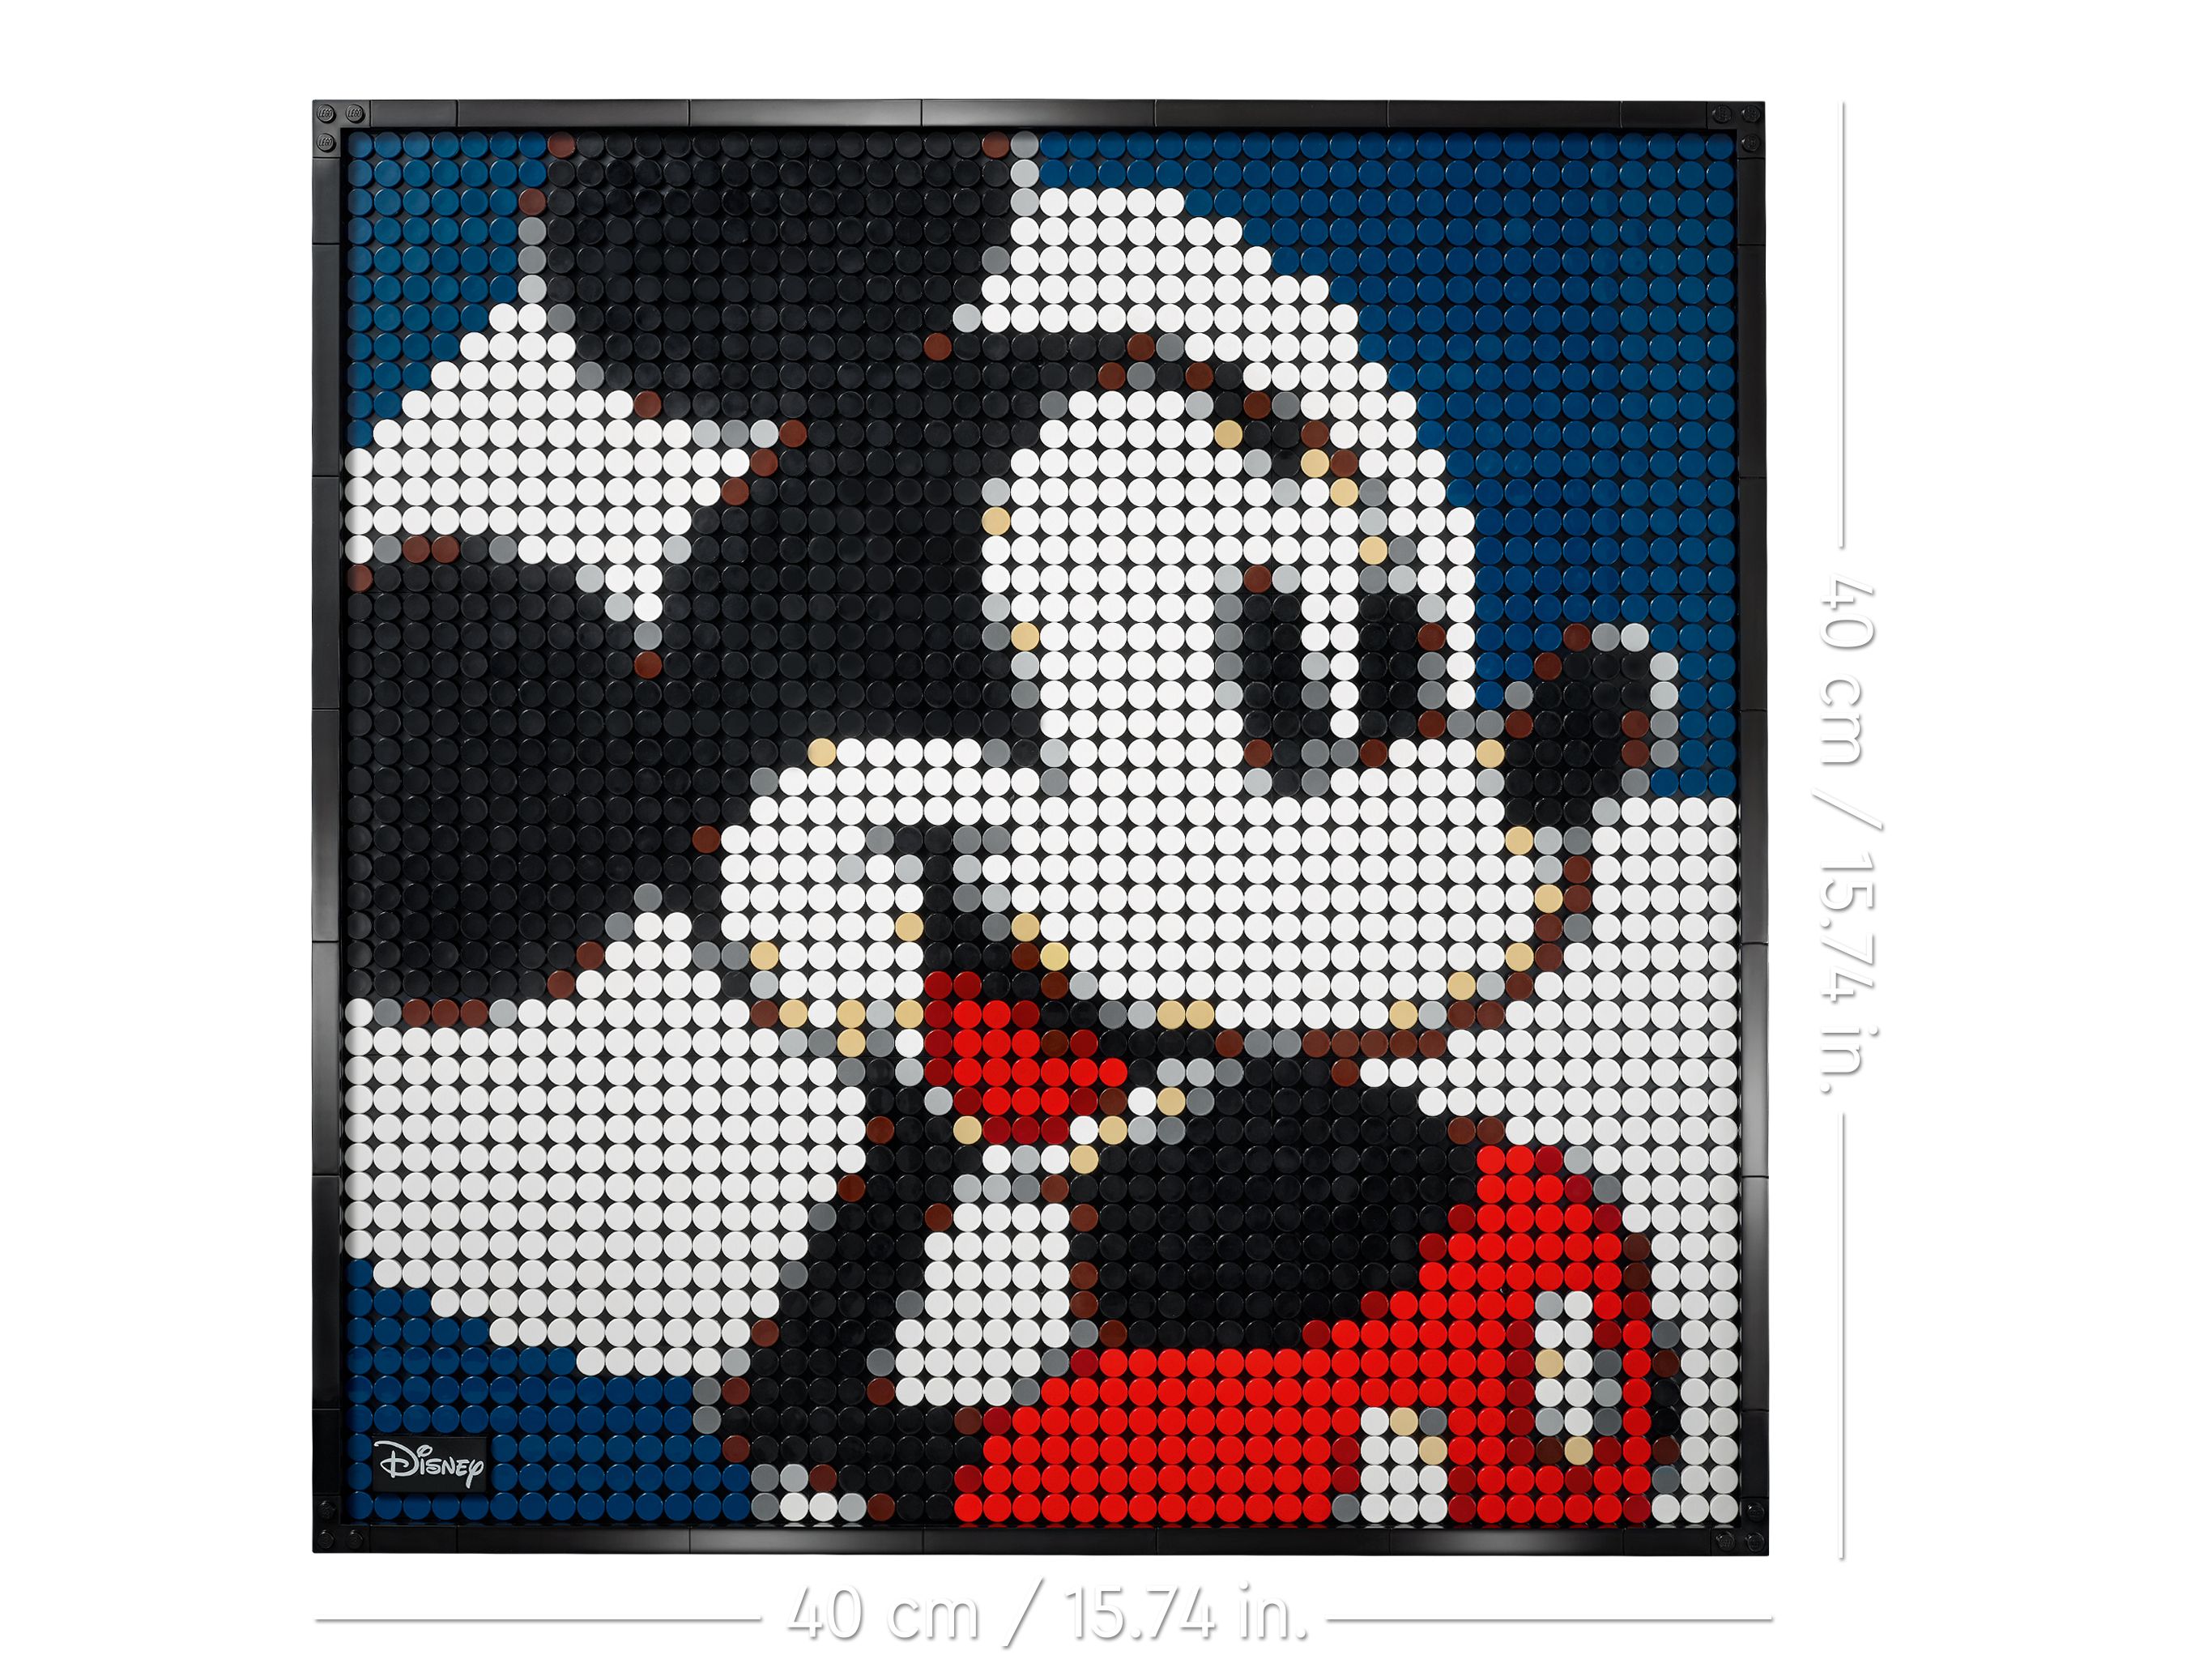 LEGO Art 31202 Disney's Mickey Mouse LEGO_31202_alt2.jpg